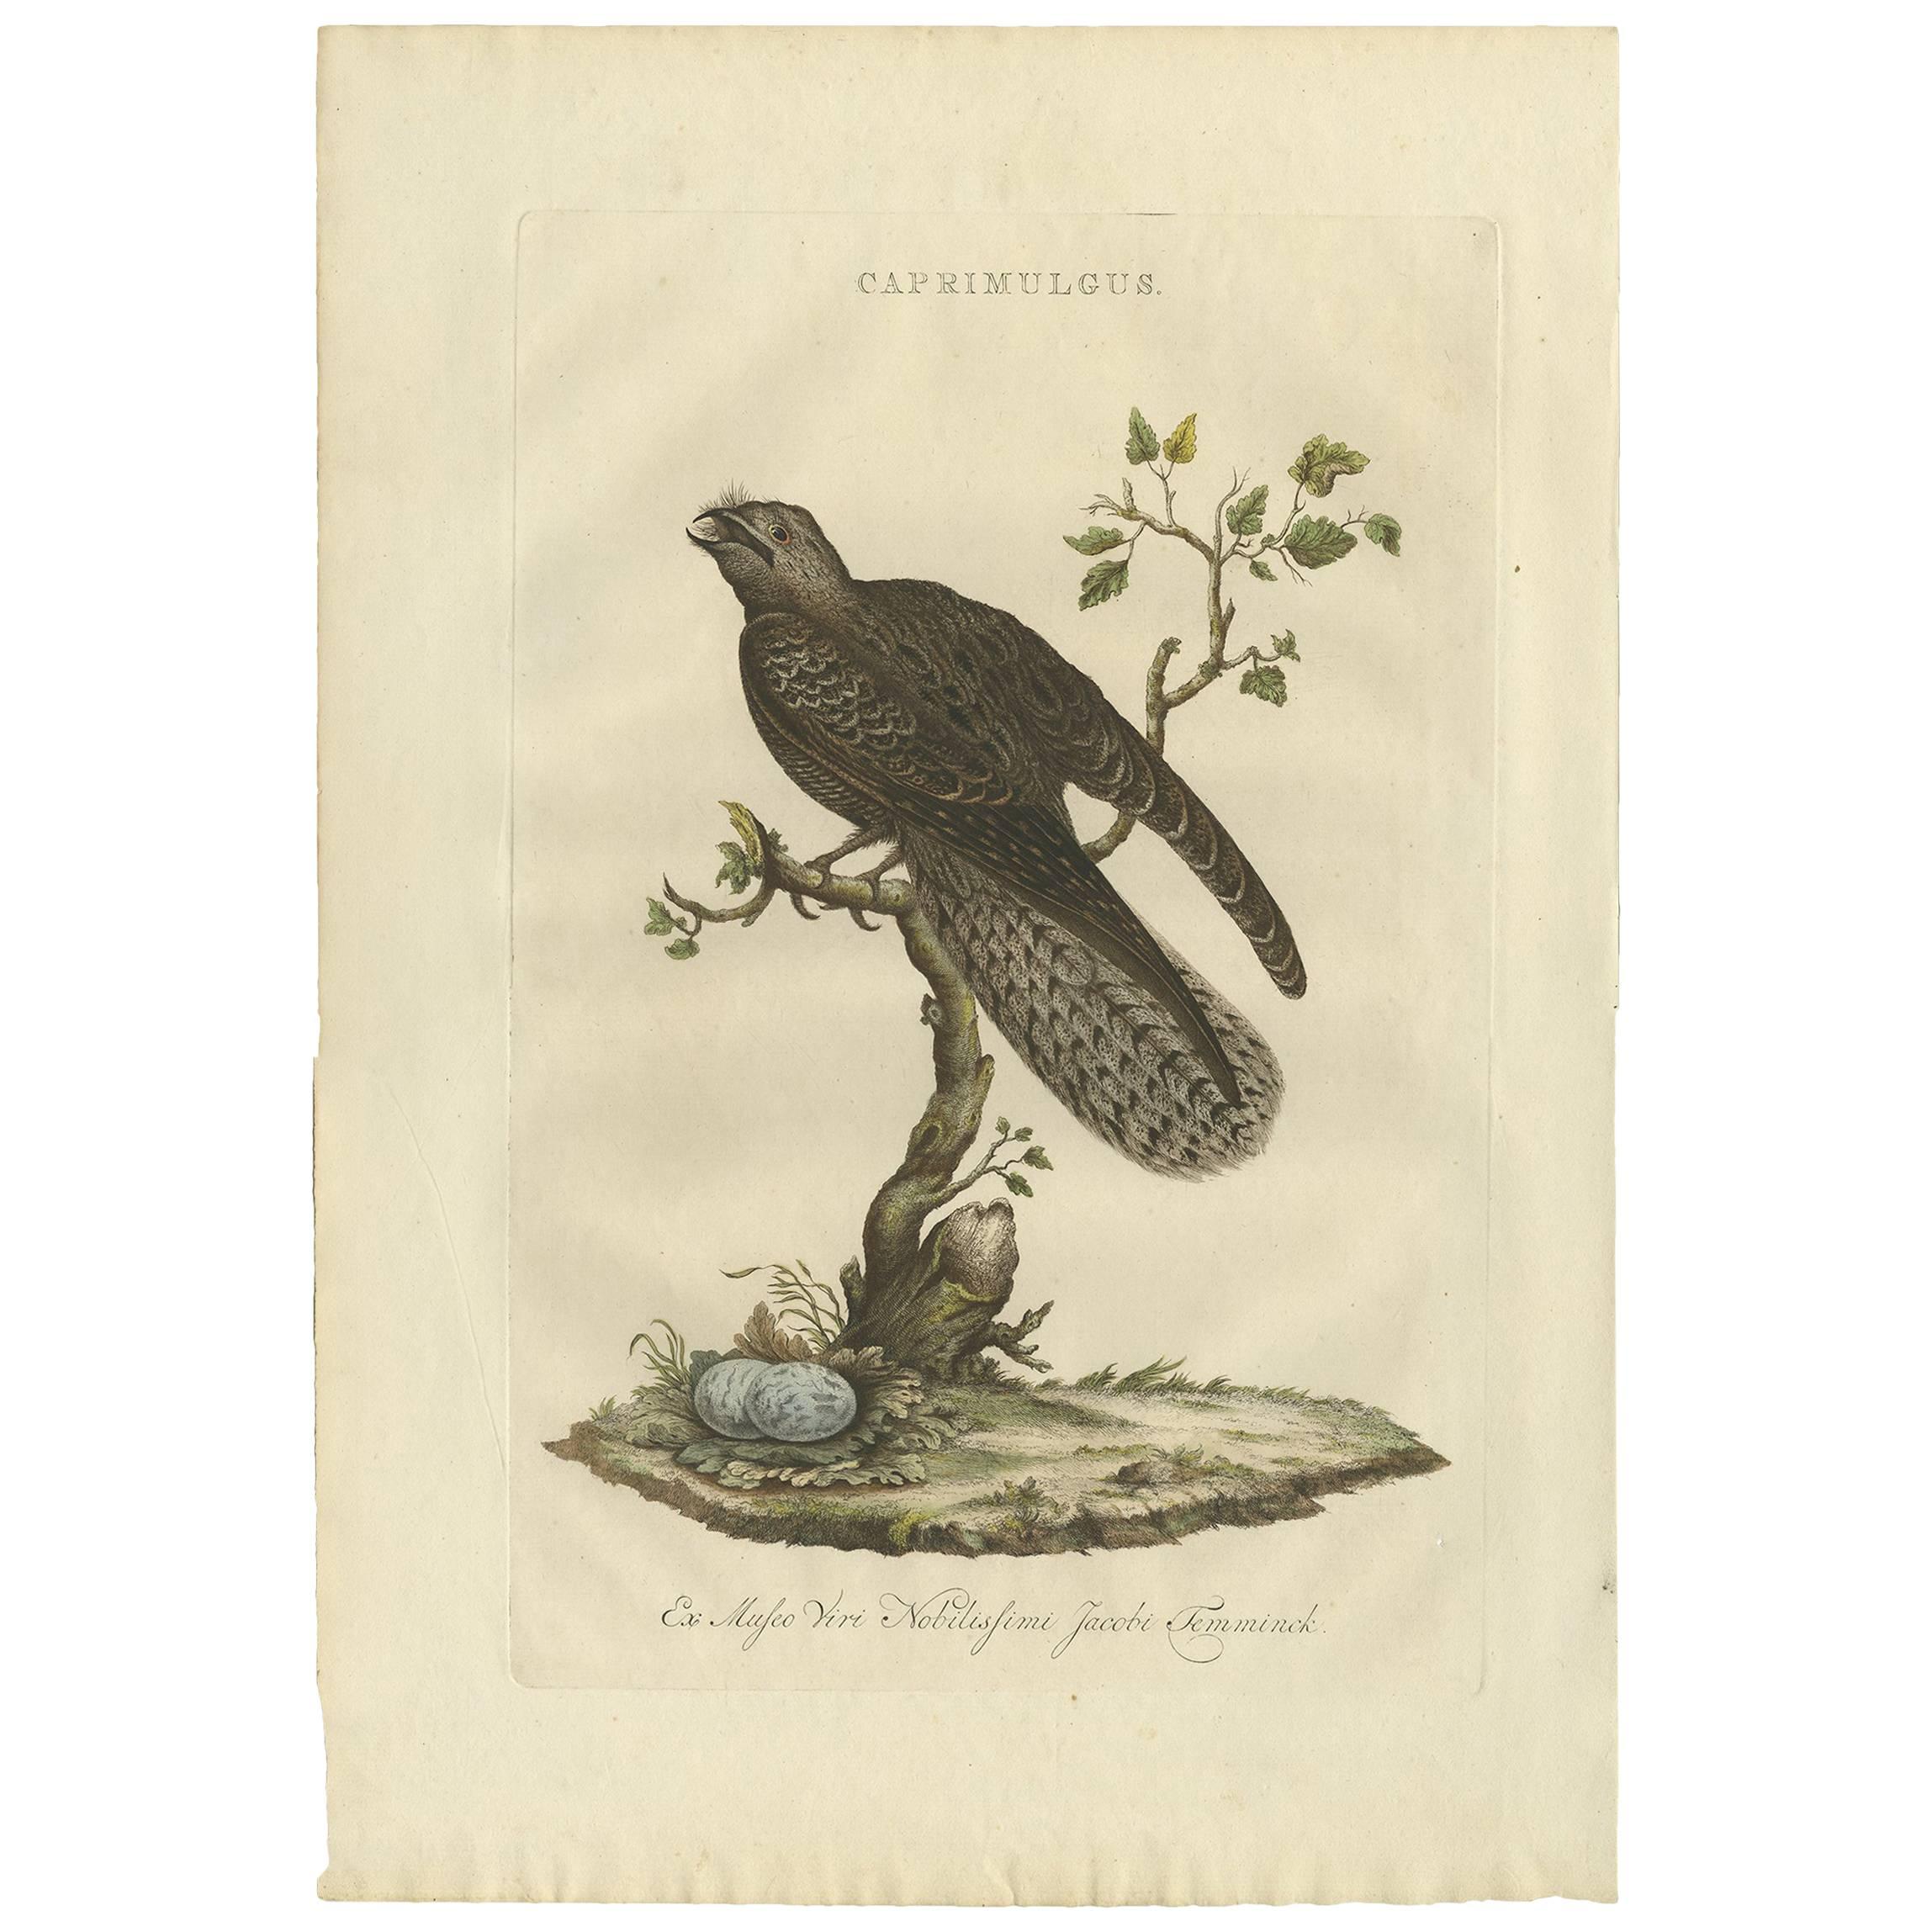 Antique Bird Print of the Caprimulgus by Sepp & Nozeman, 1770